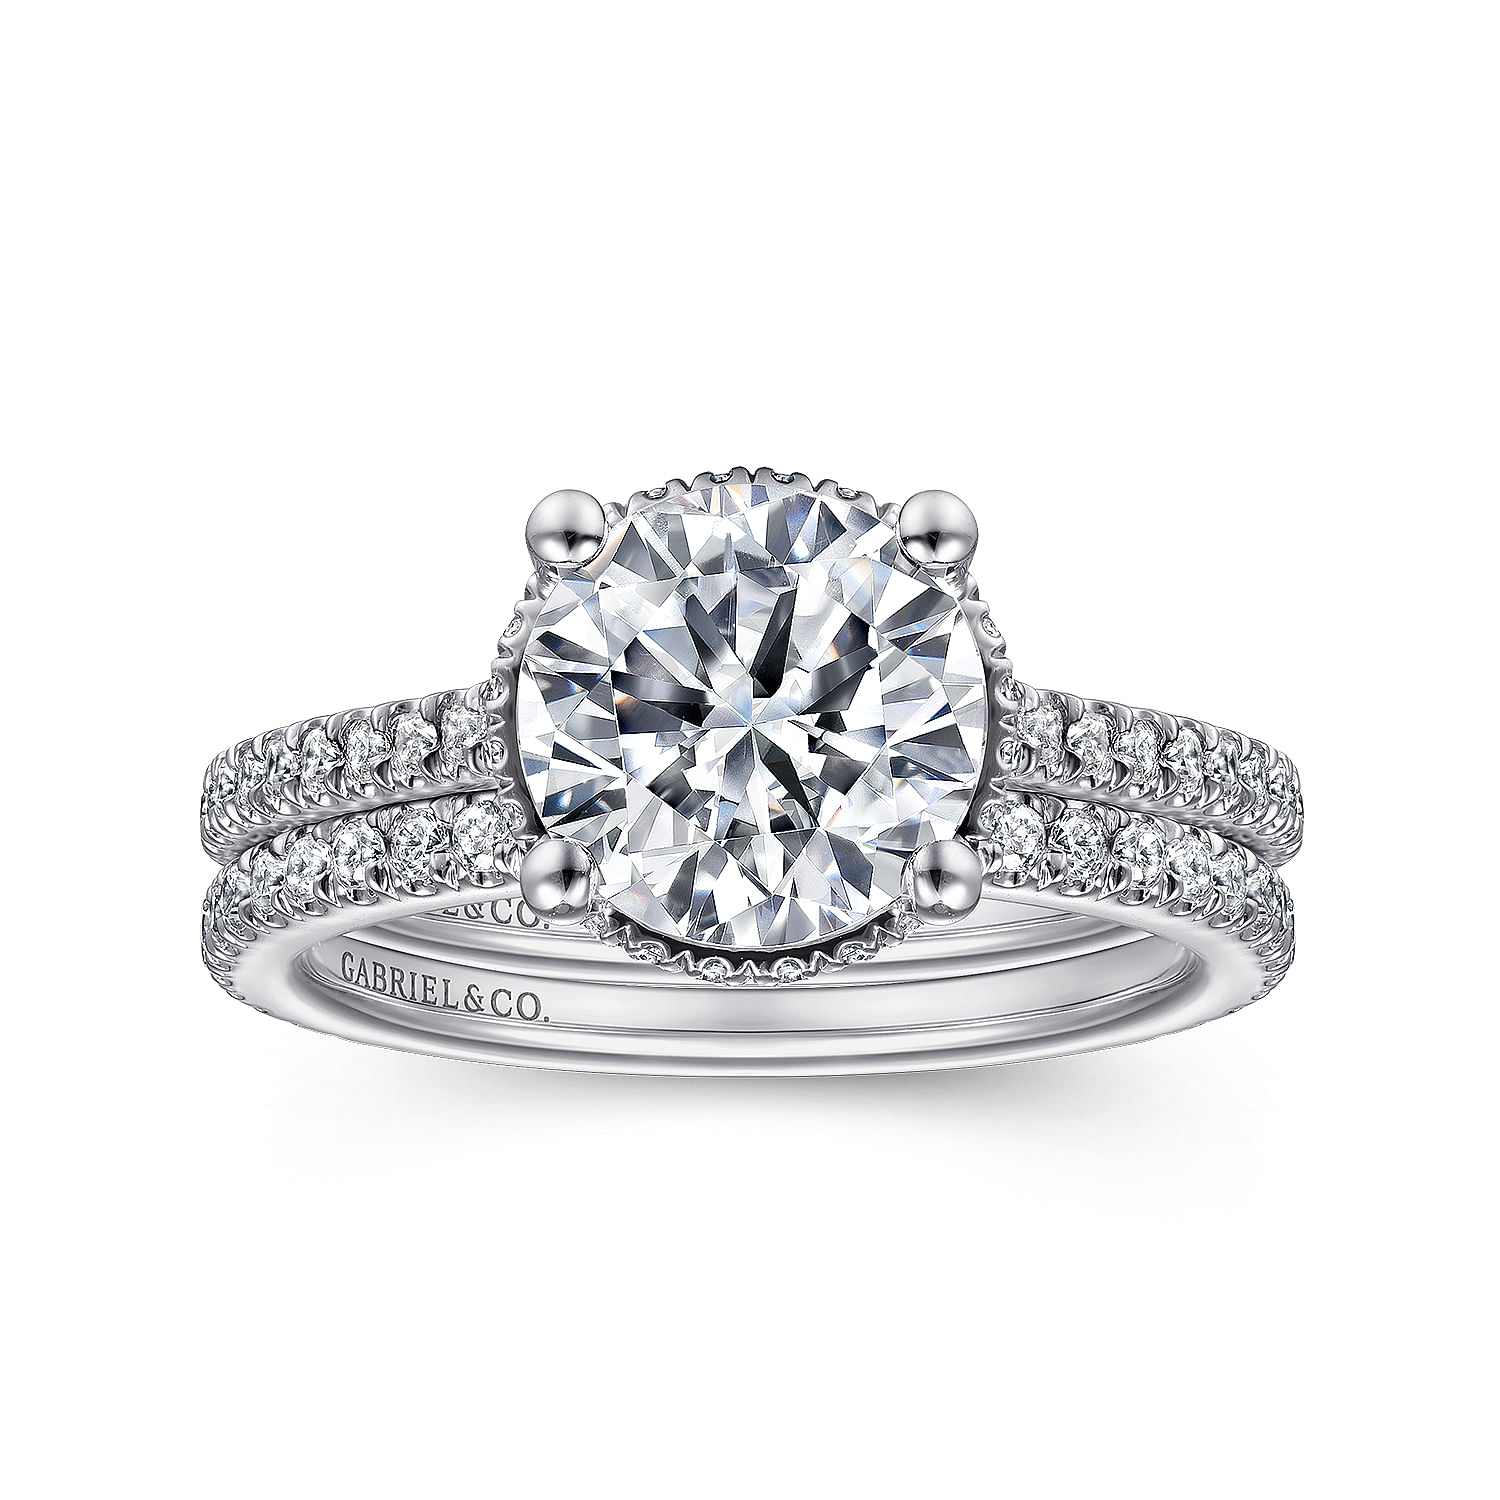 18K White Gold Hidden Halo Round Diamond Engagement Ring